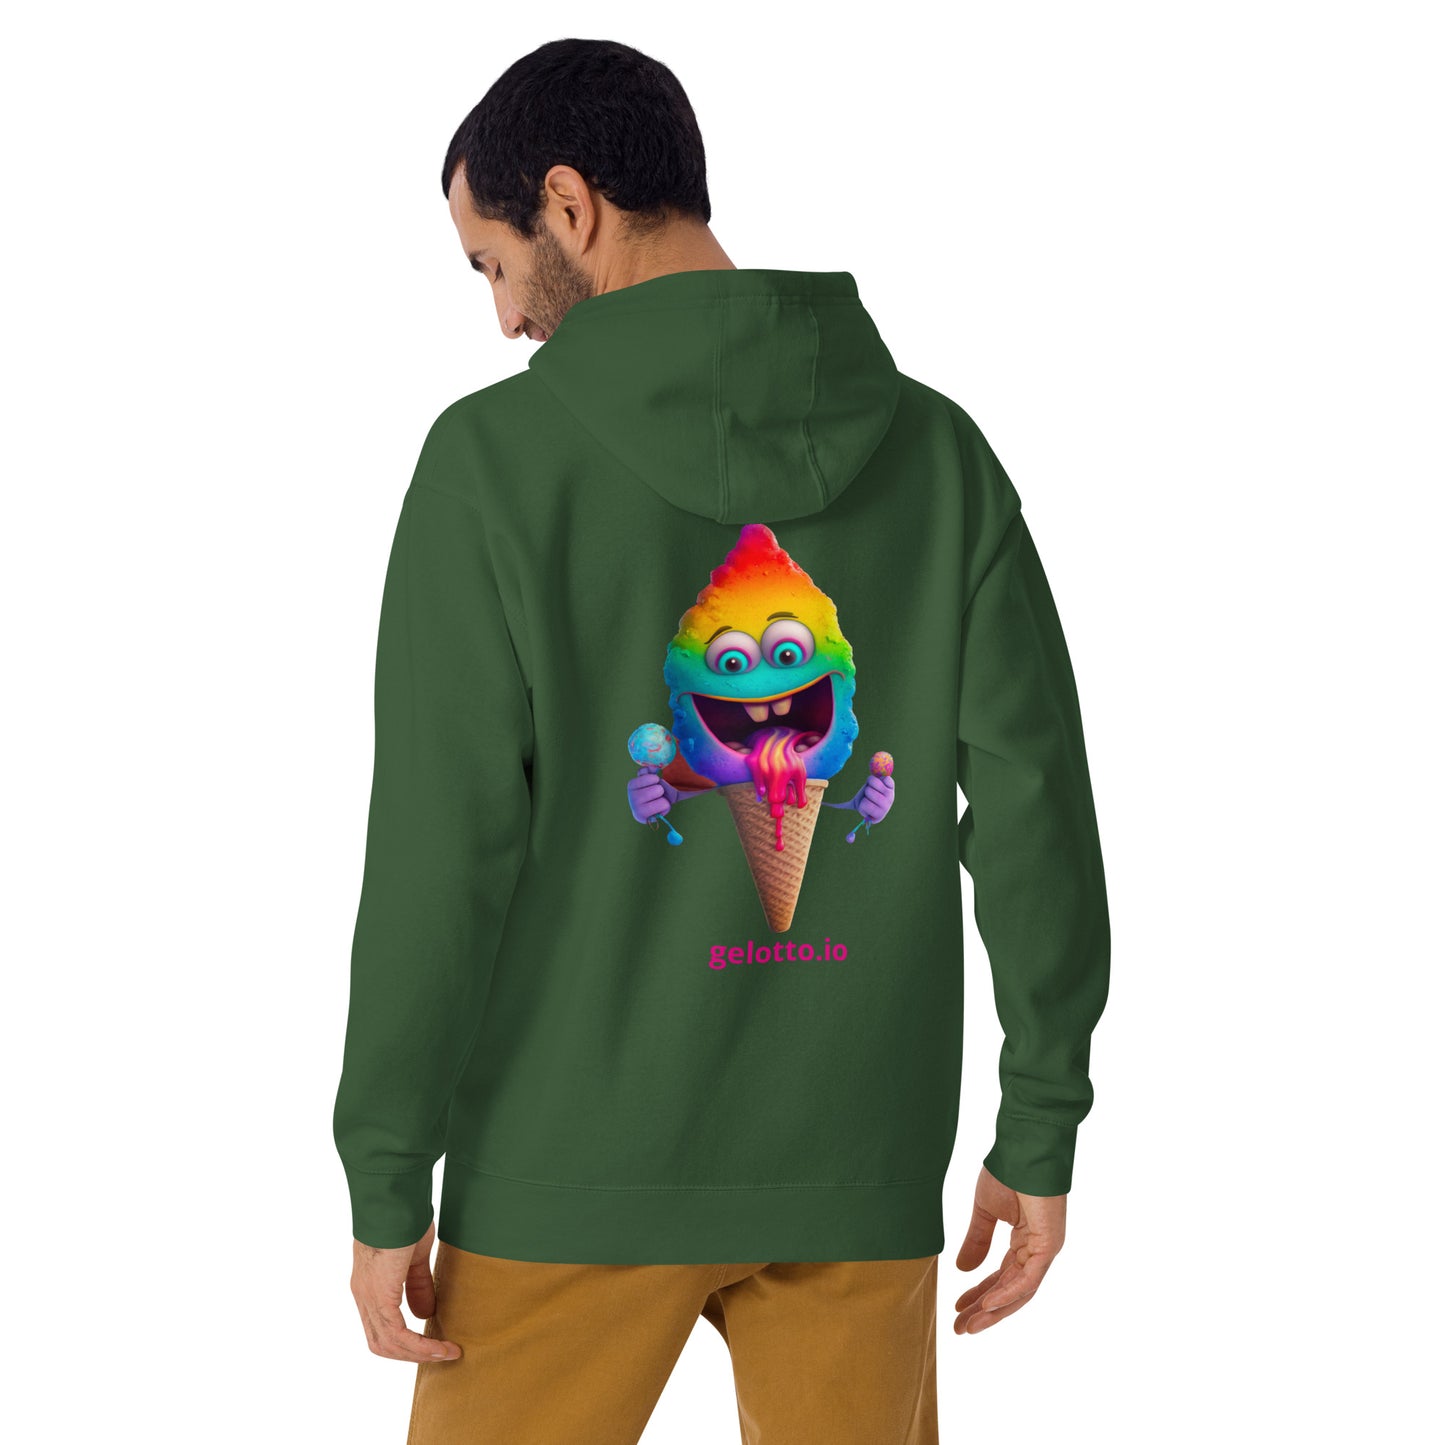 Unisex Hoodie Rainbow Mostro on back, OG on front